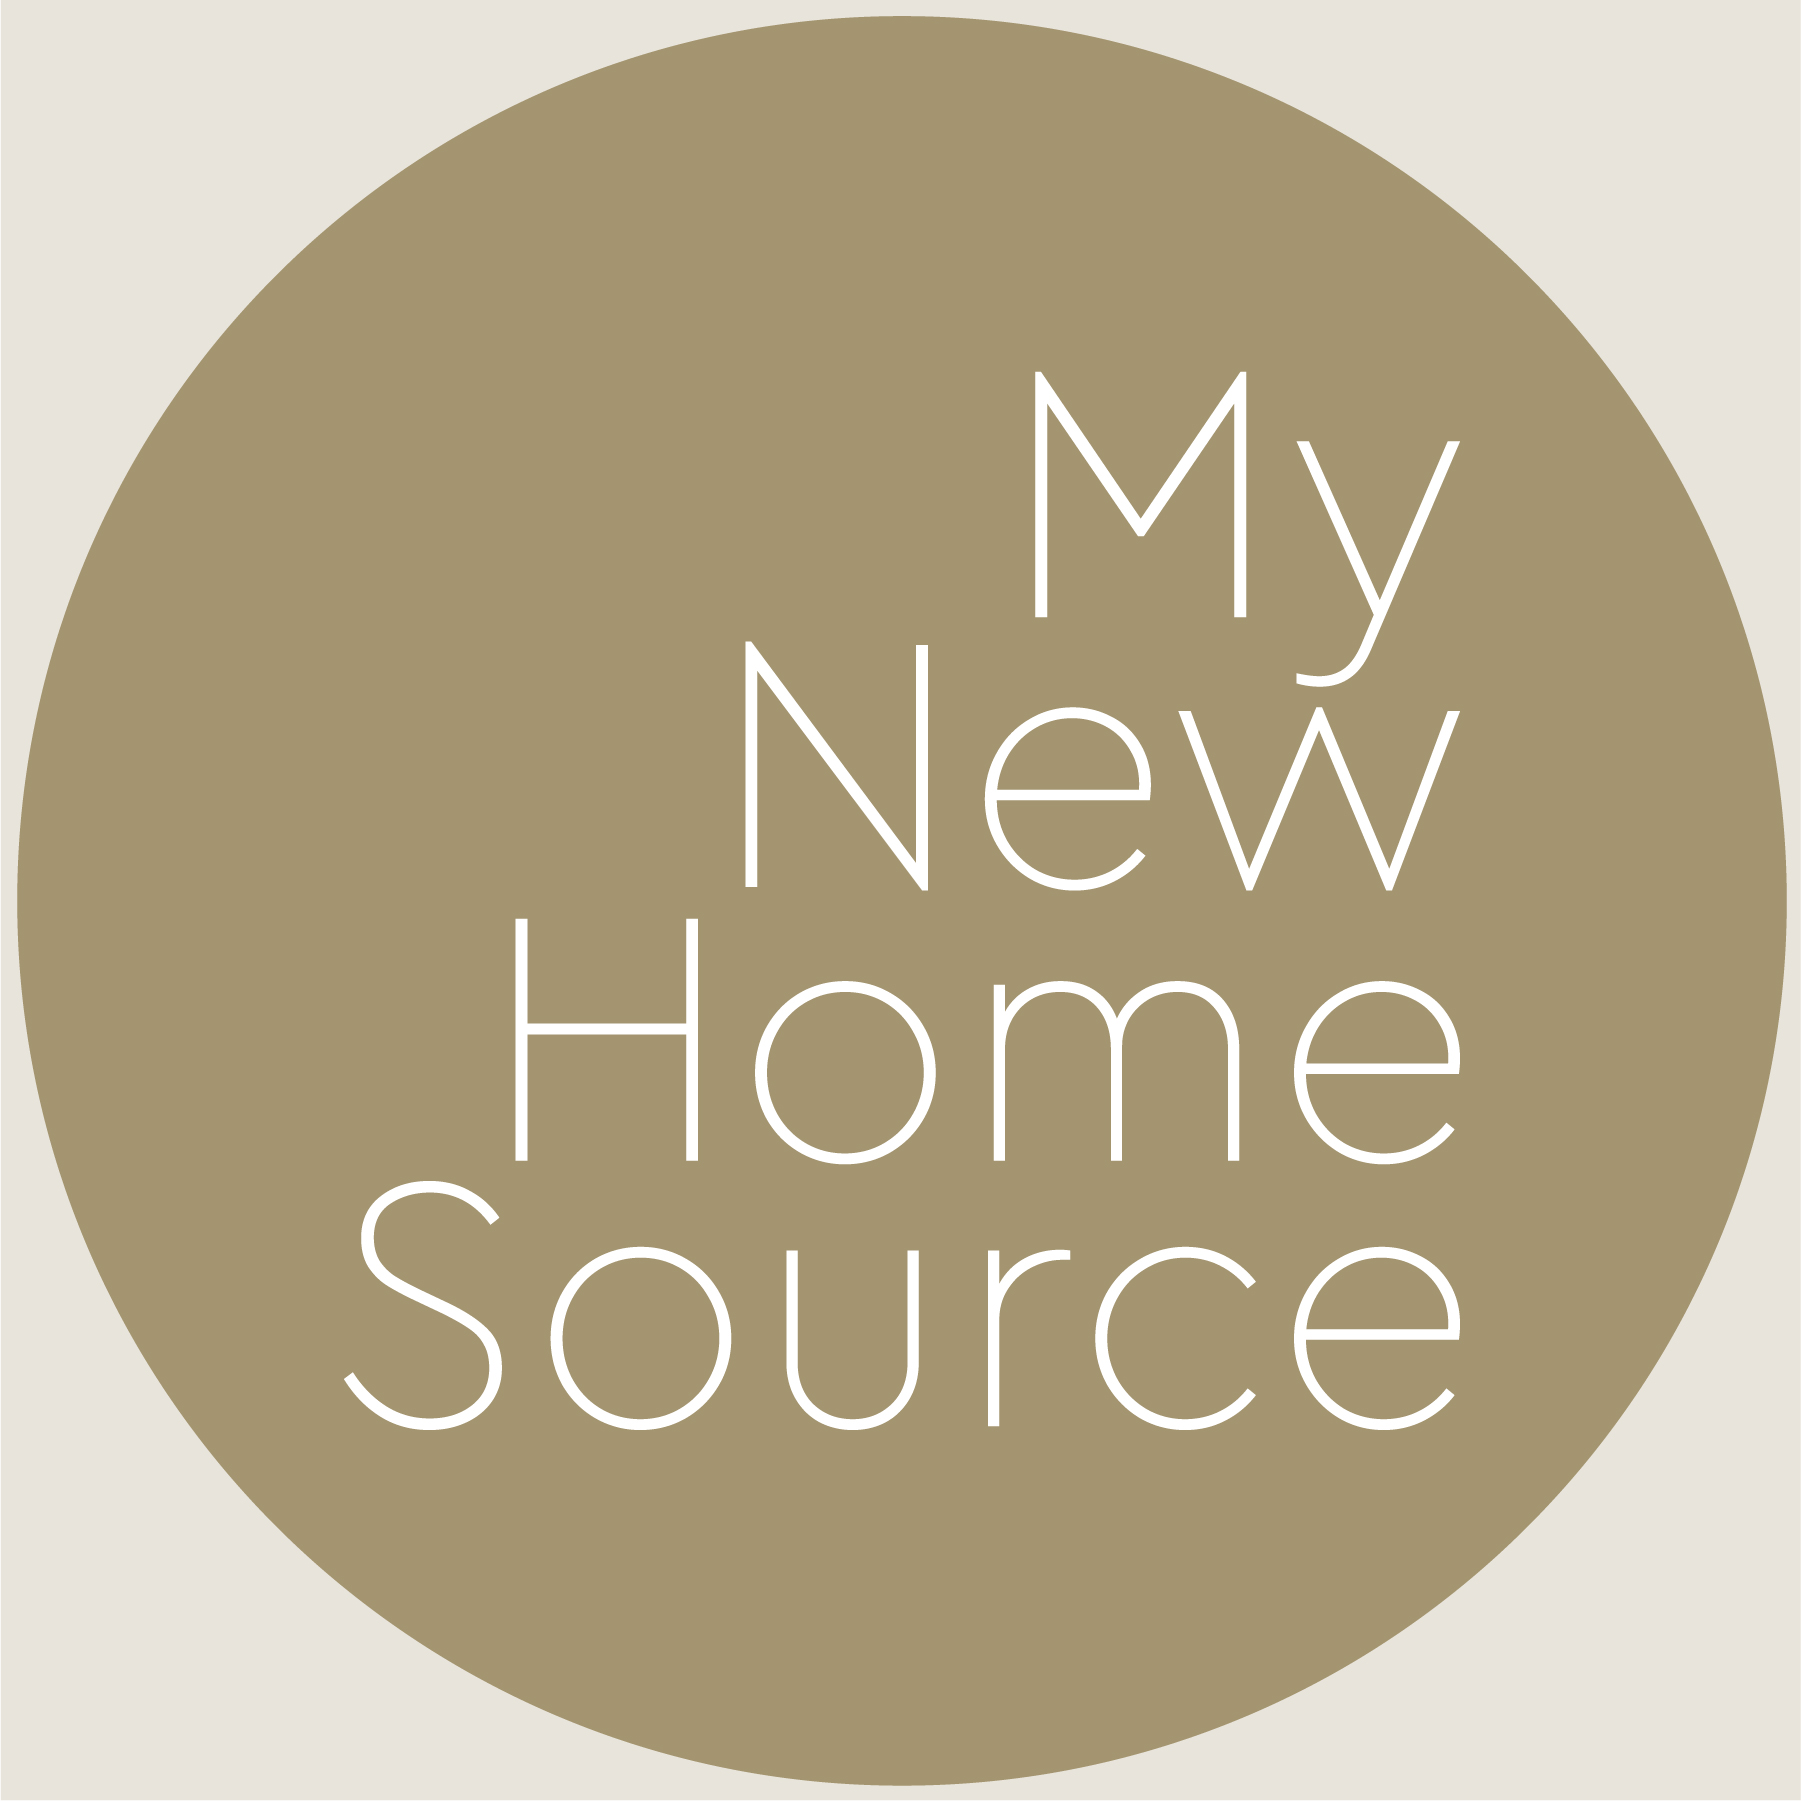 My New Home Source Round Logo